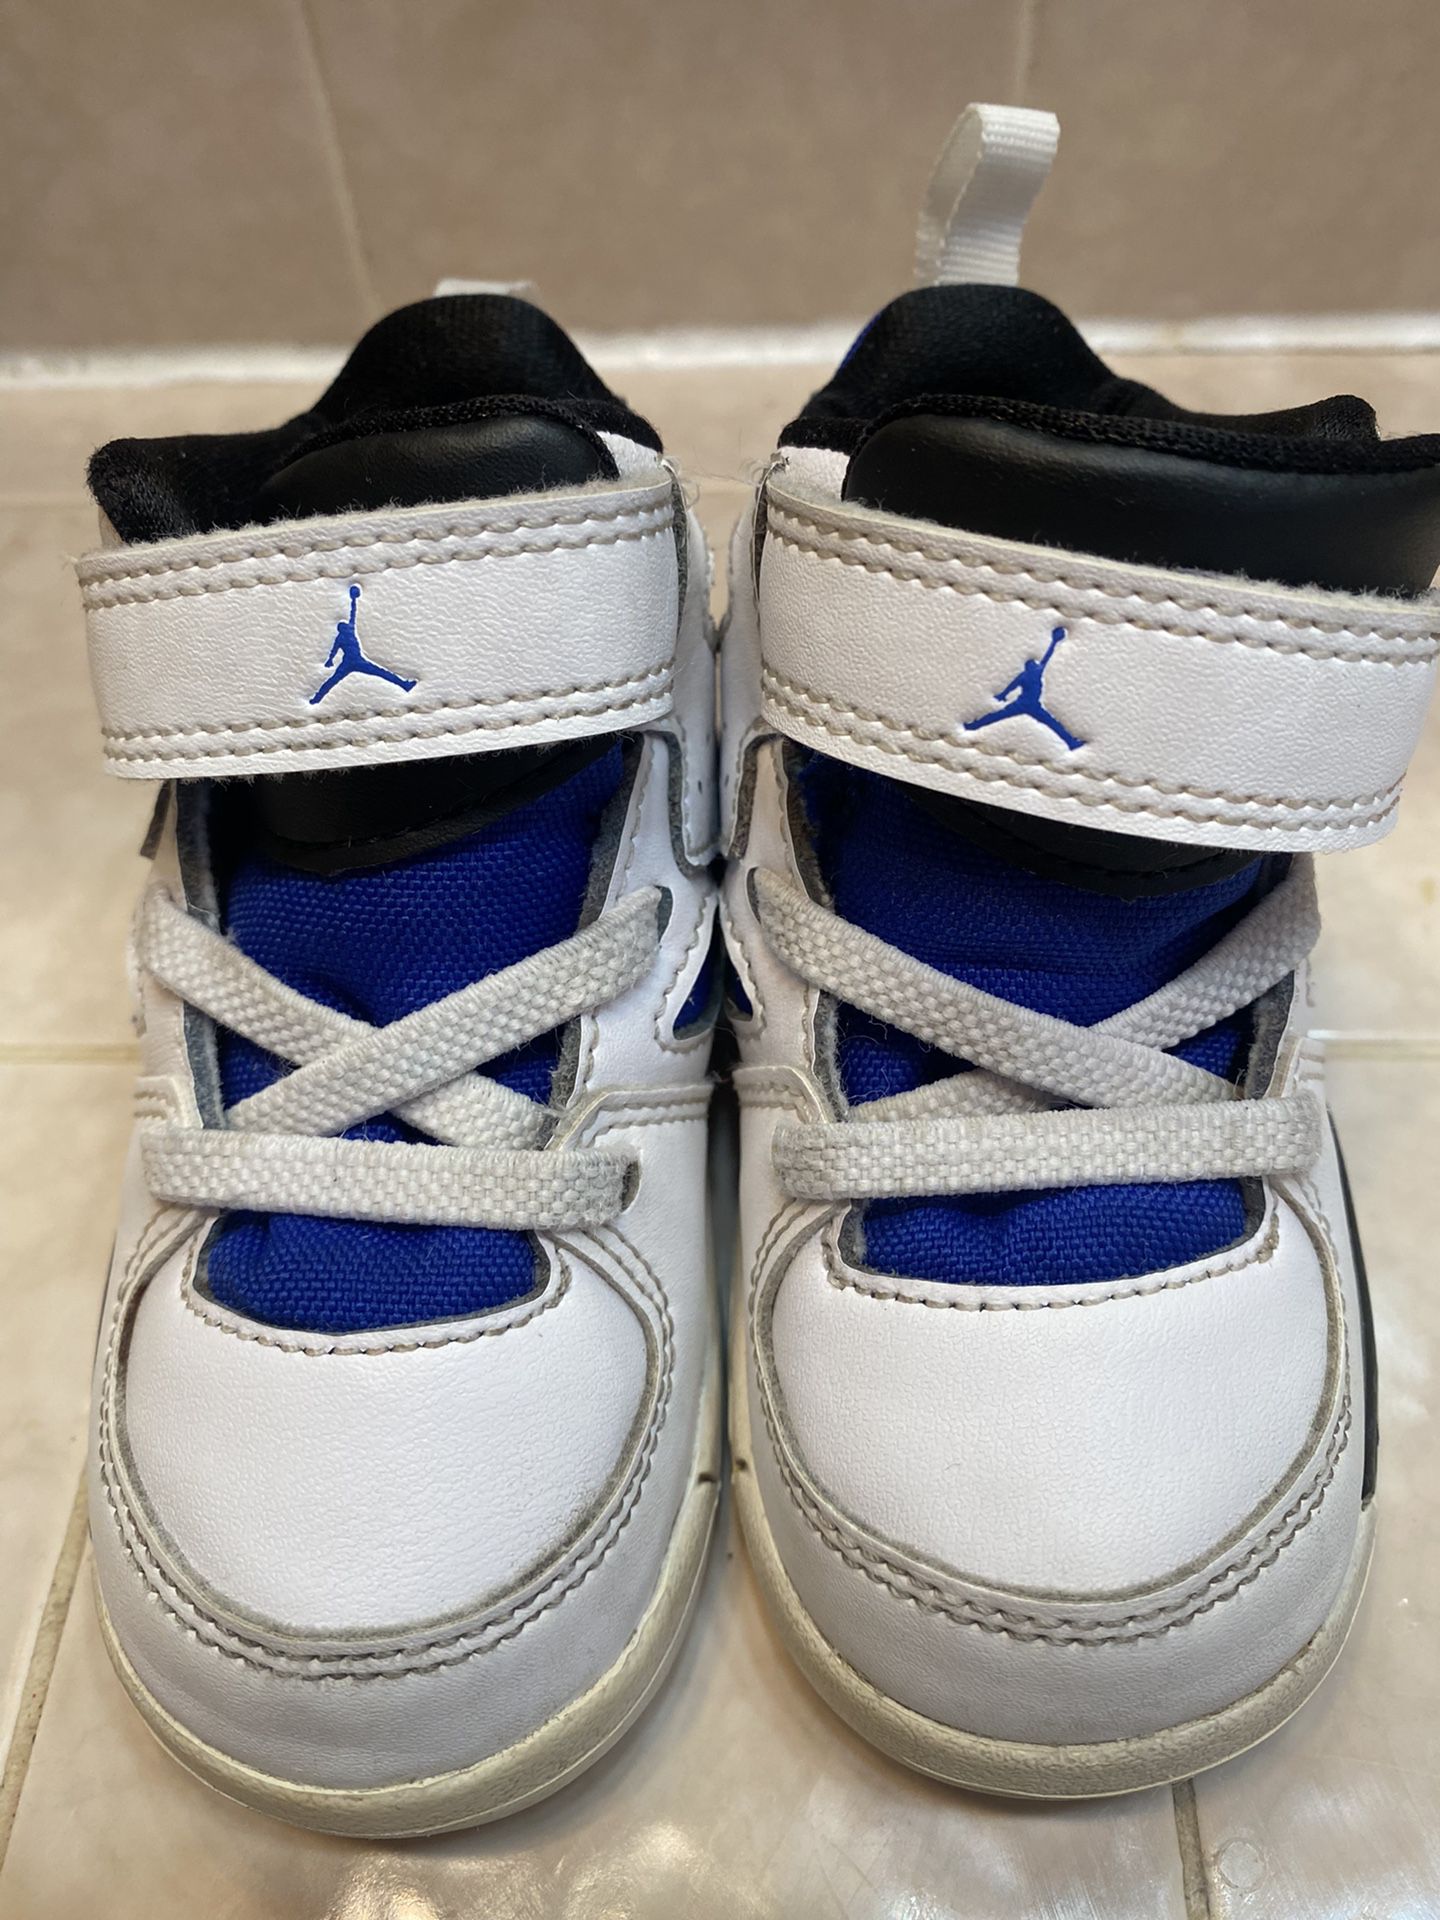 White Jordan Shoes Size:5 For Kids